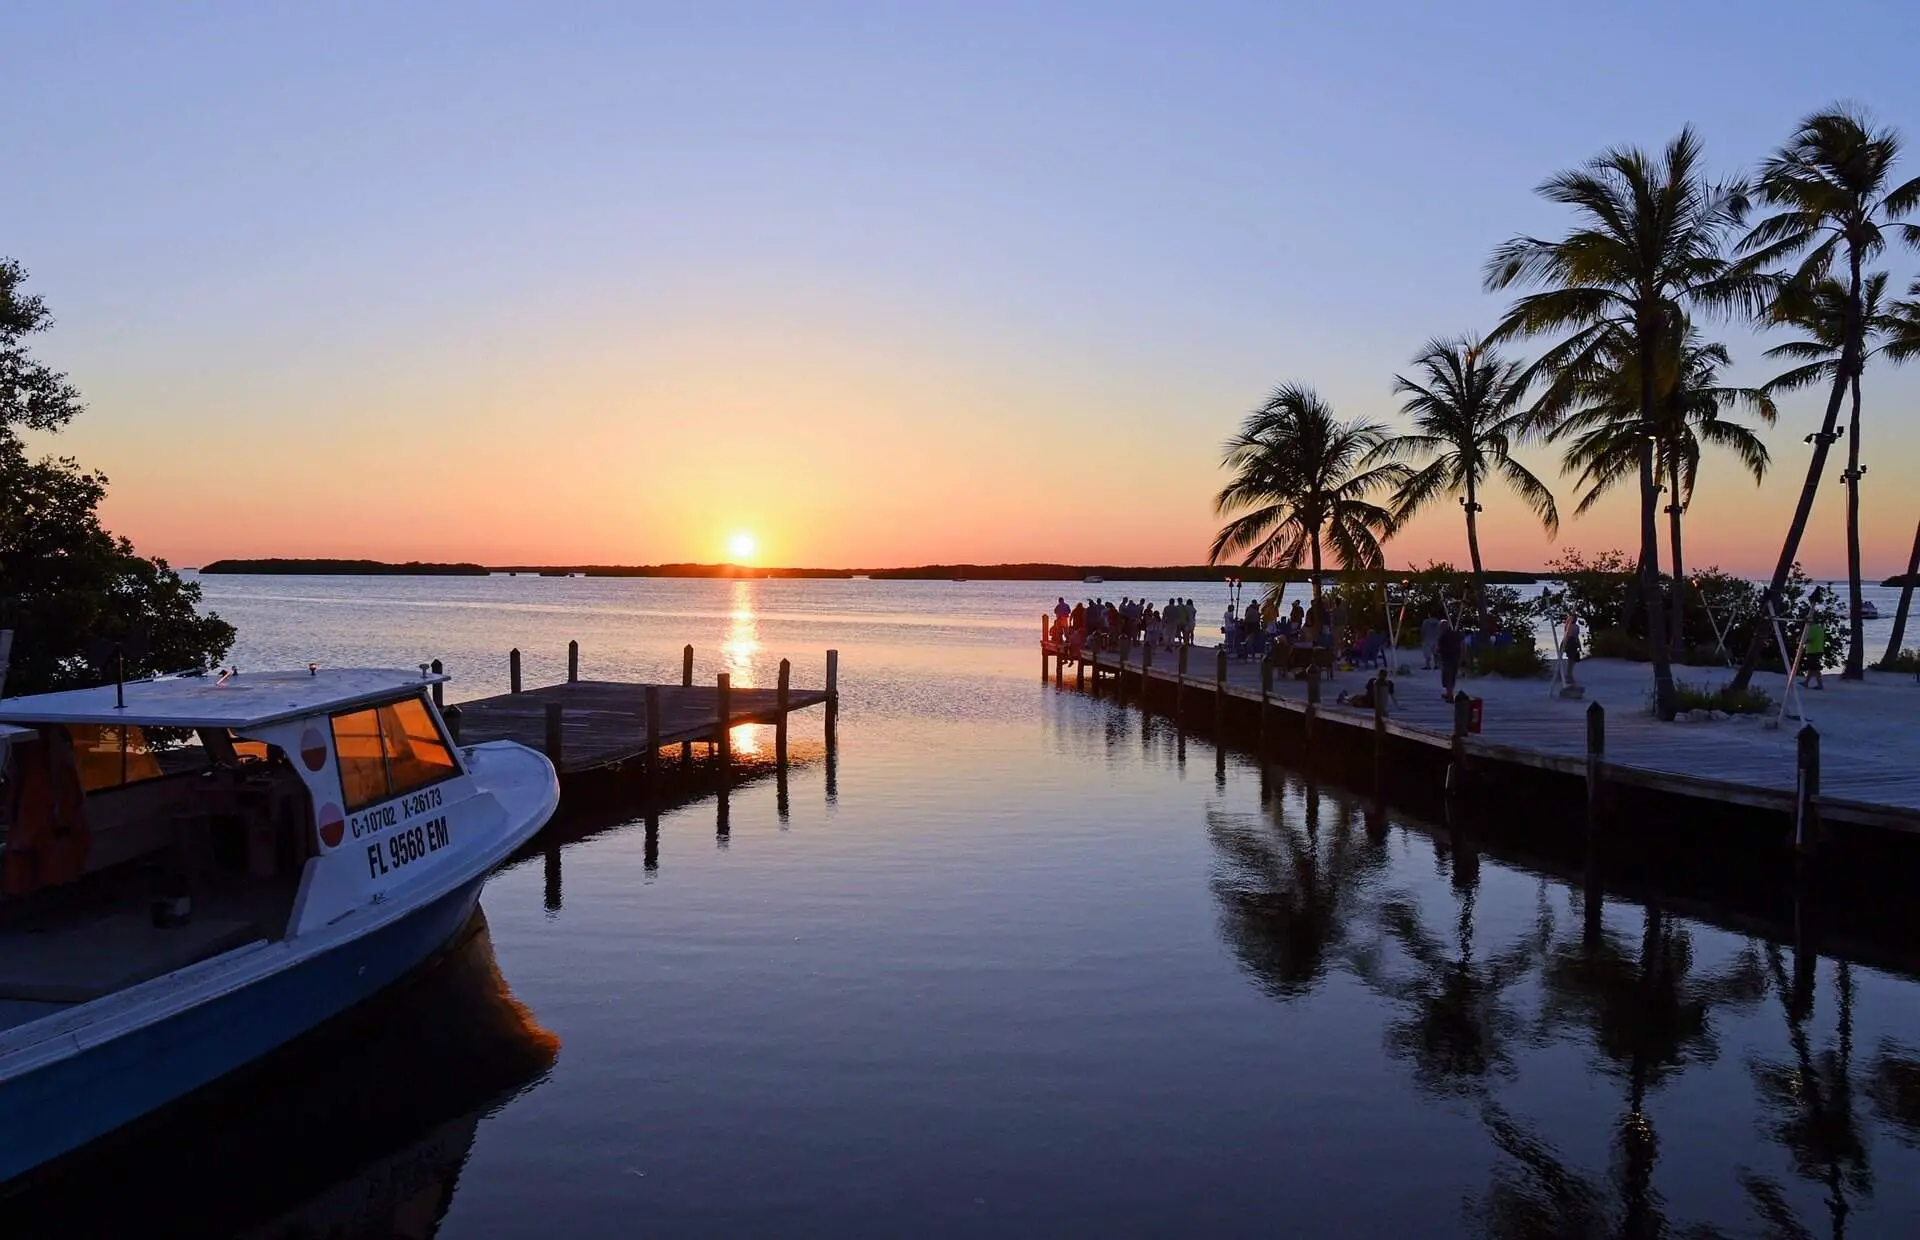 Sunset in Florida Keys